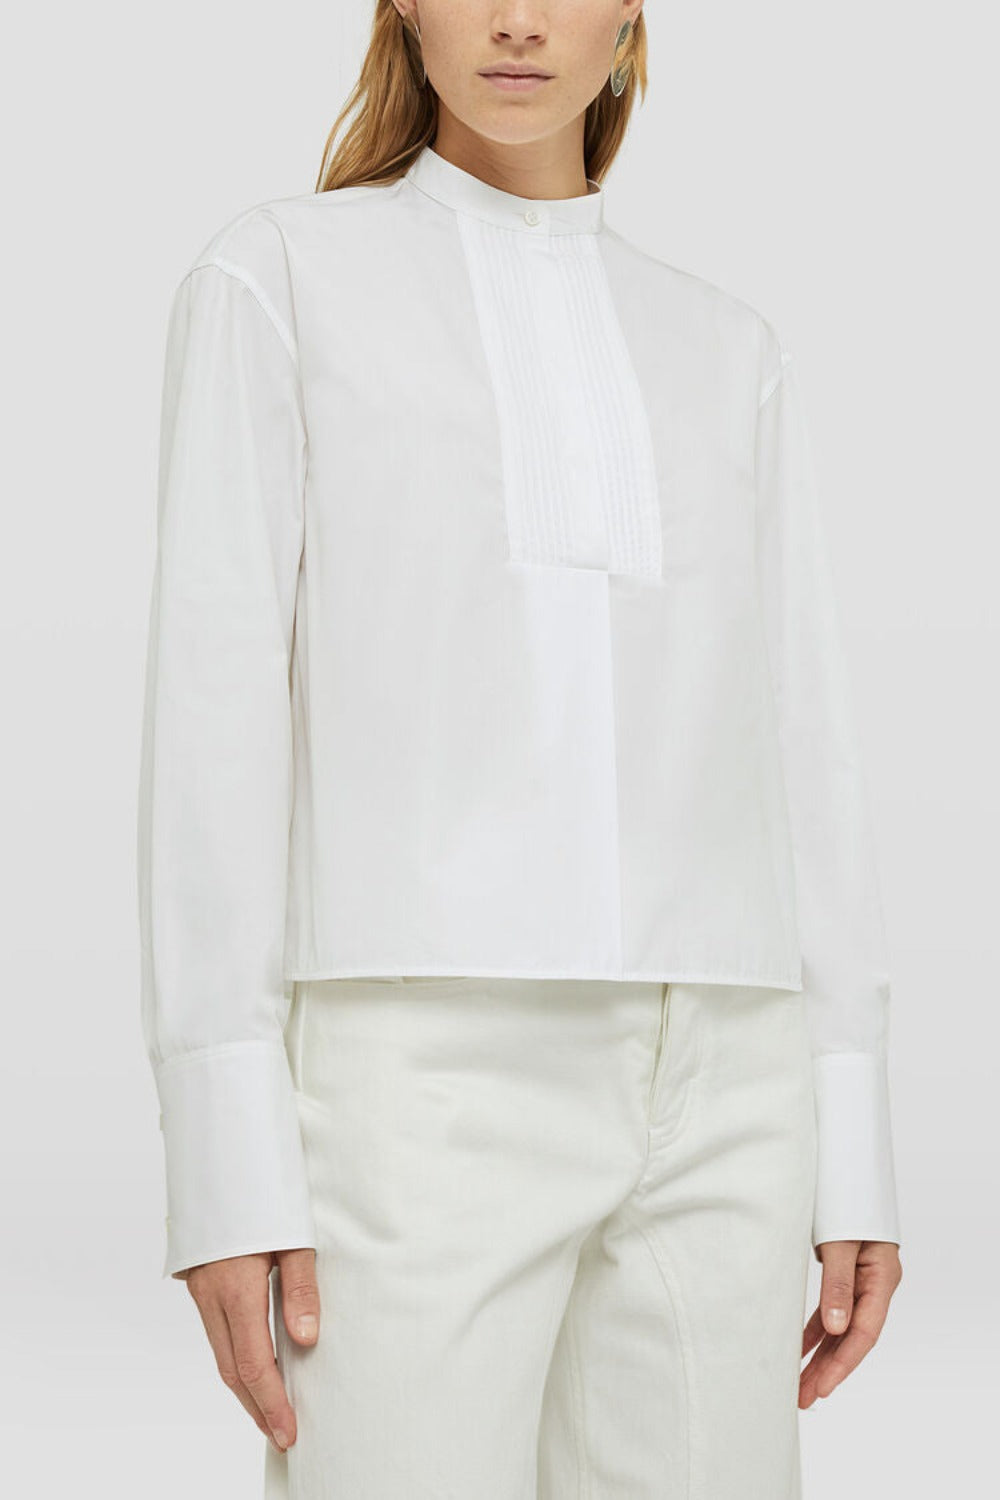 Jil Sander Thursday Shirt - White